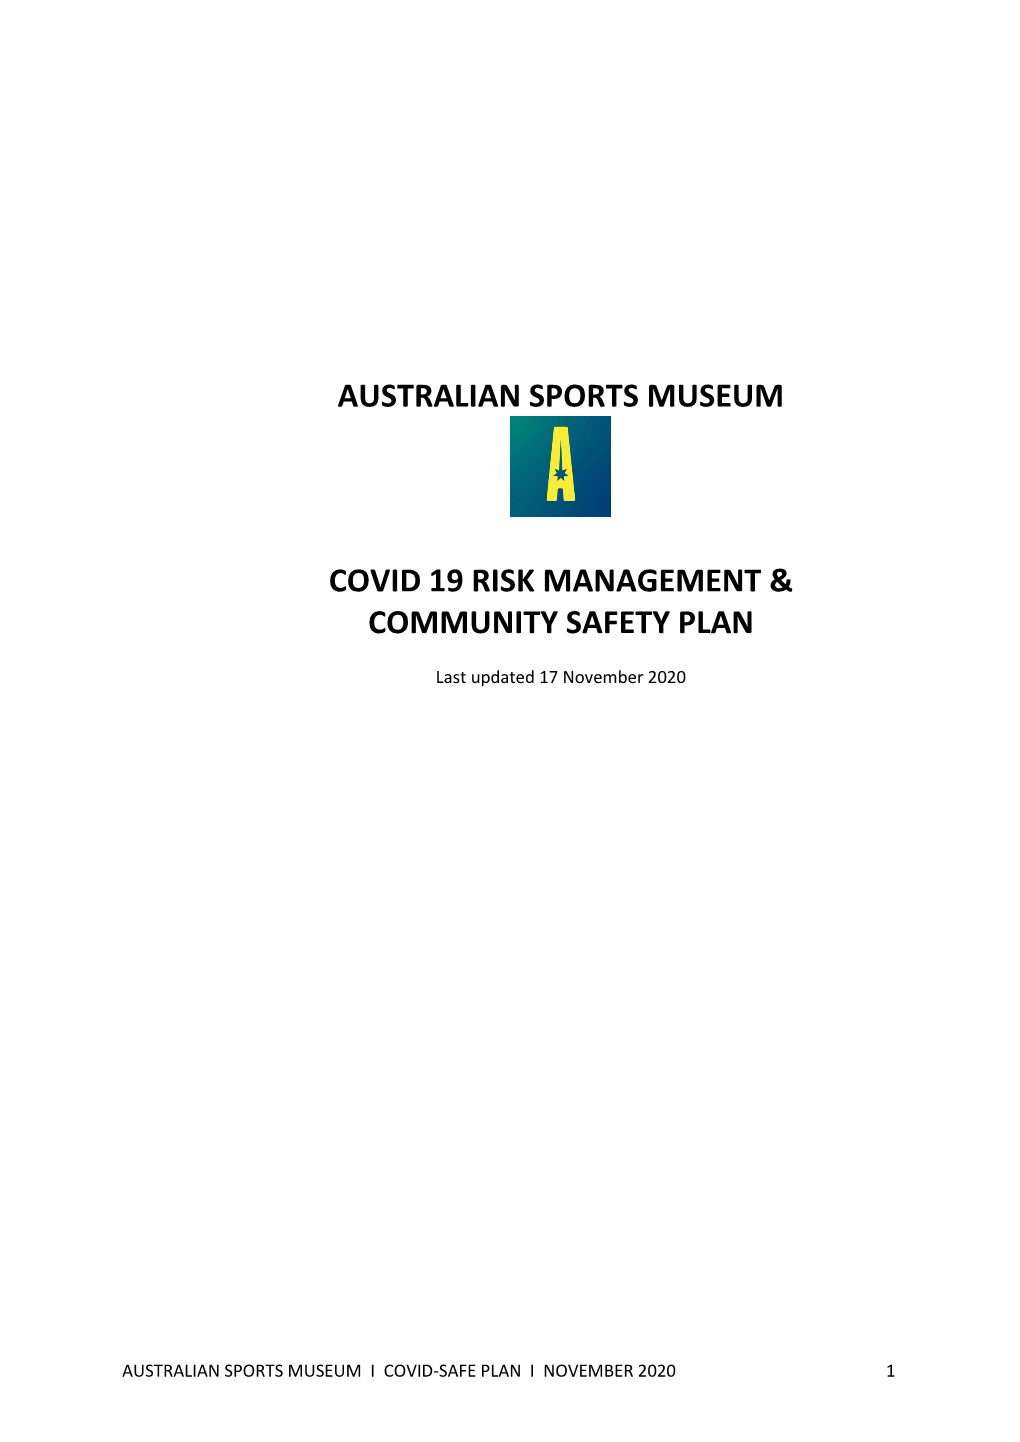 Australian Sports Museum Covid 19 Risk Management